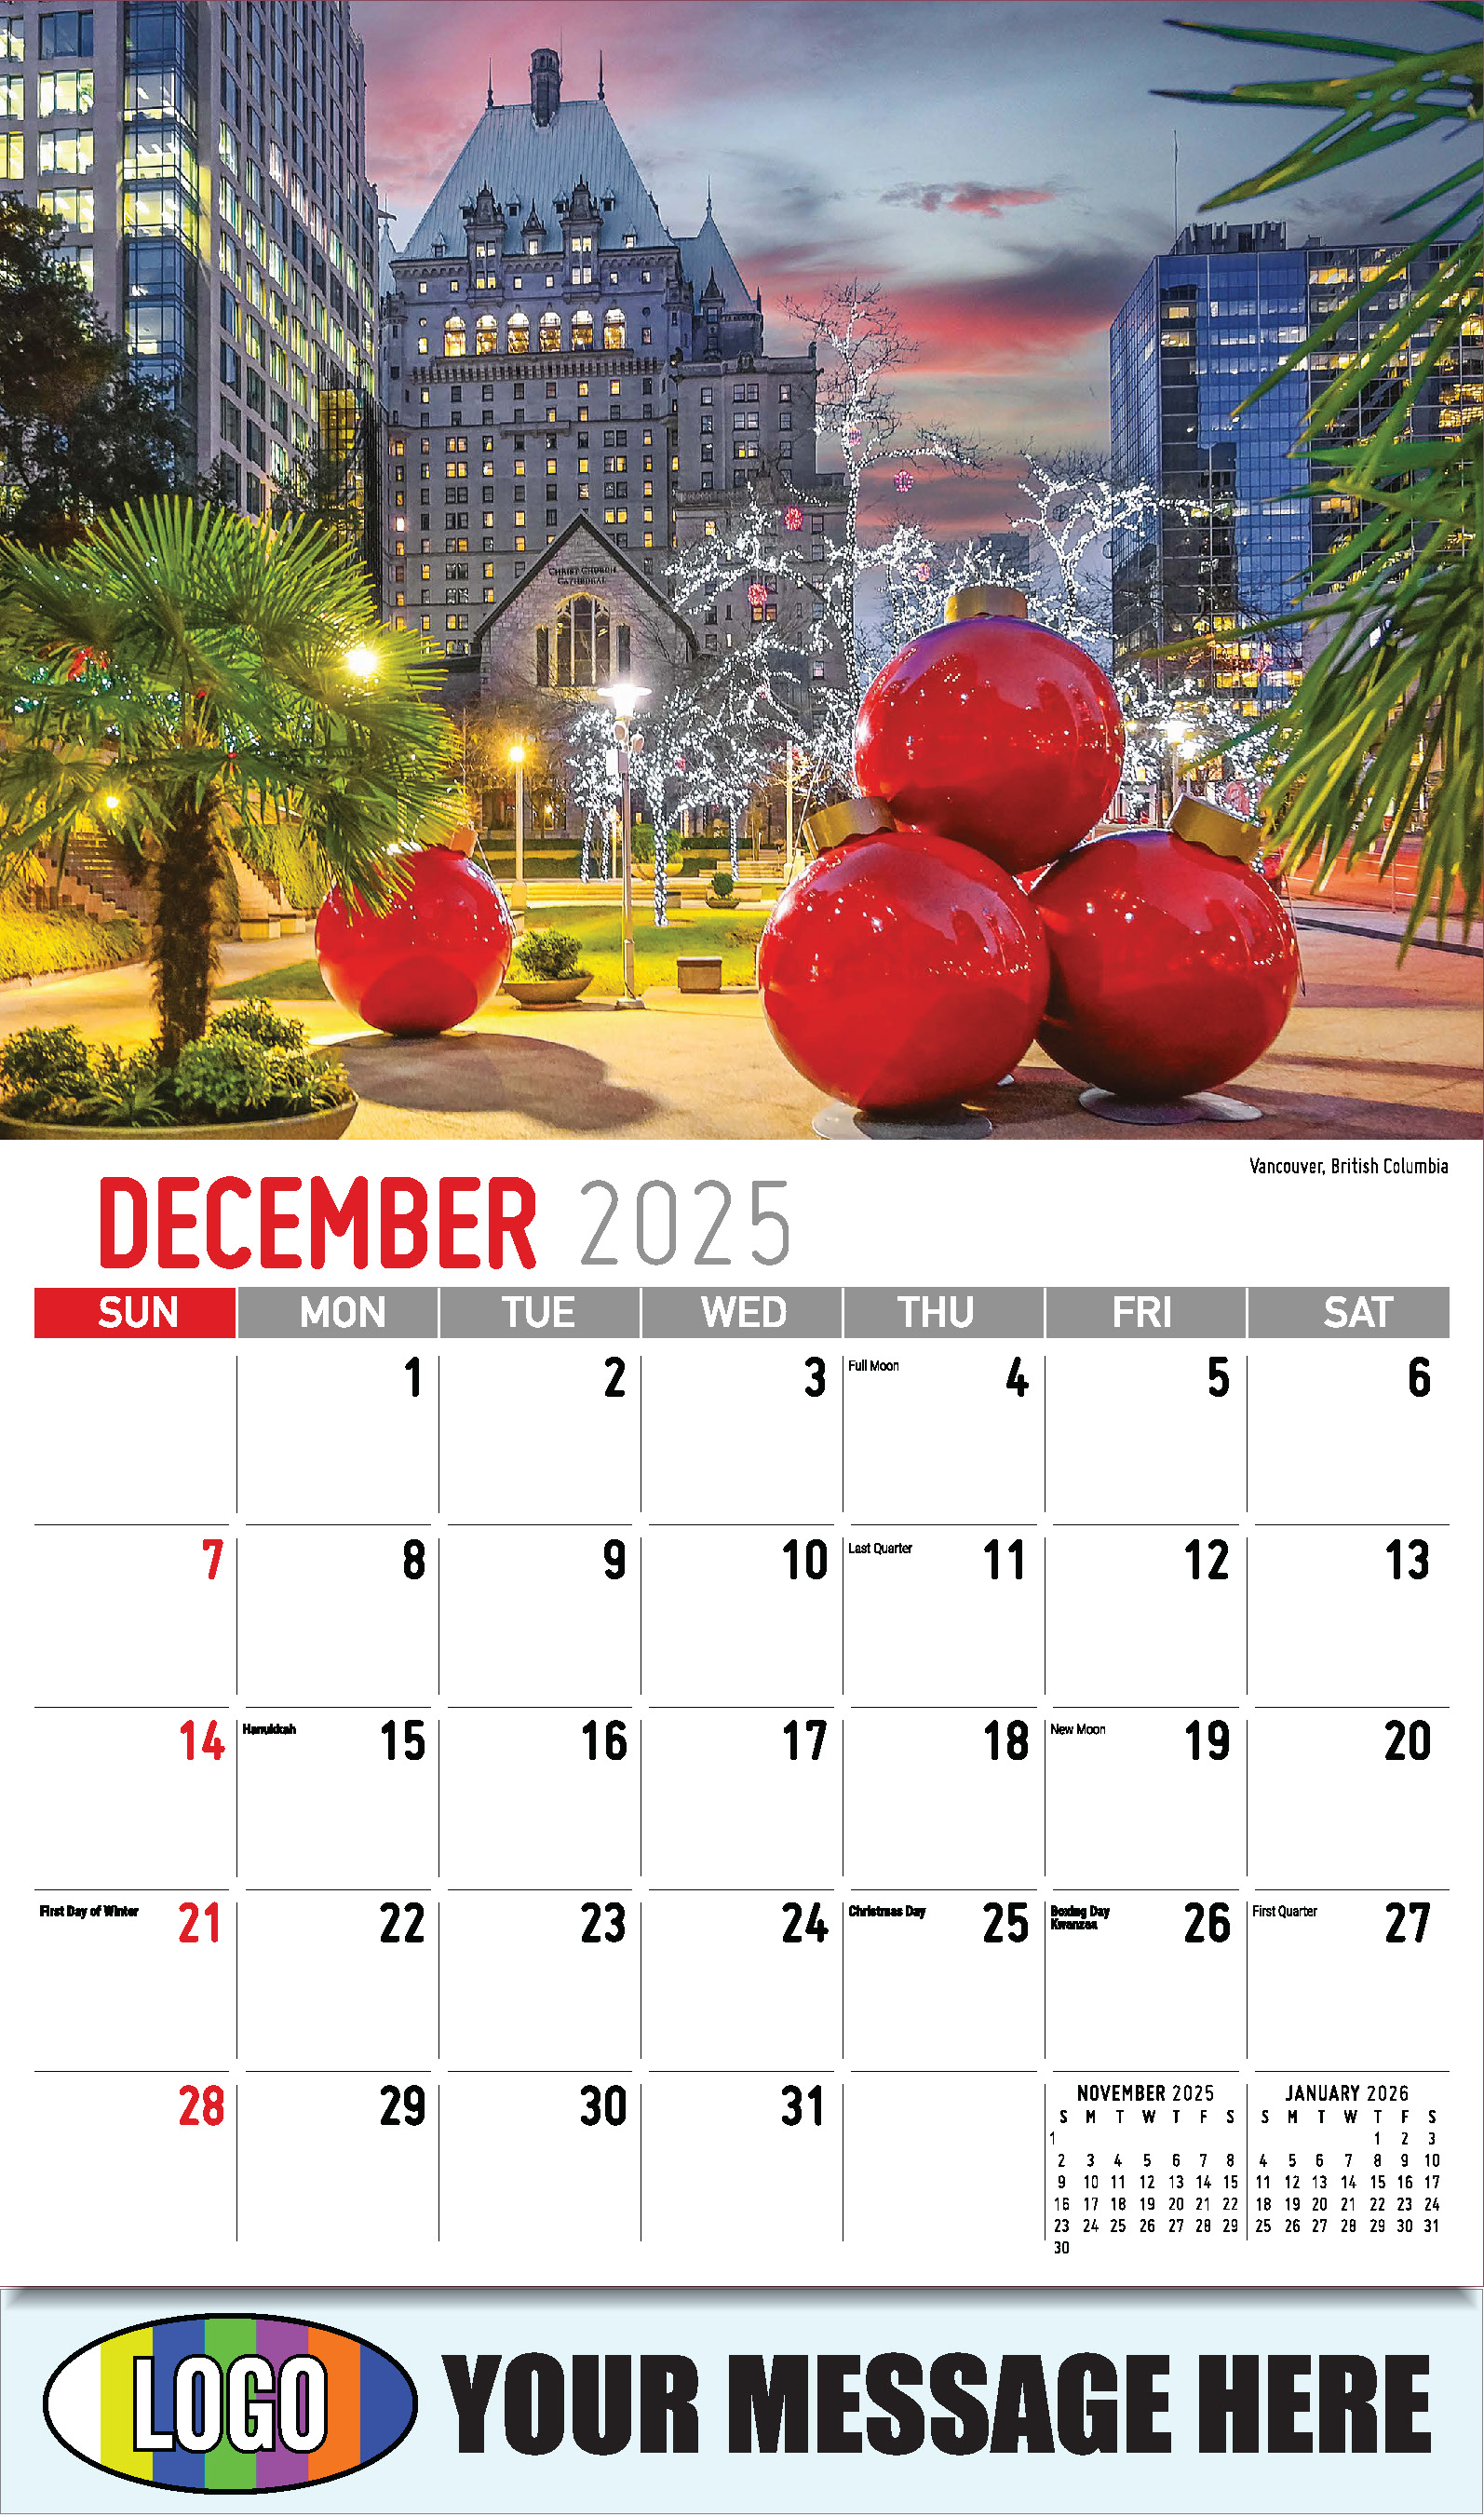 Scenes of Western Canada 2025 Business Promotional Wall Calendar - December